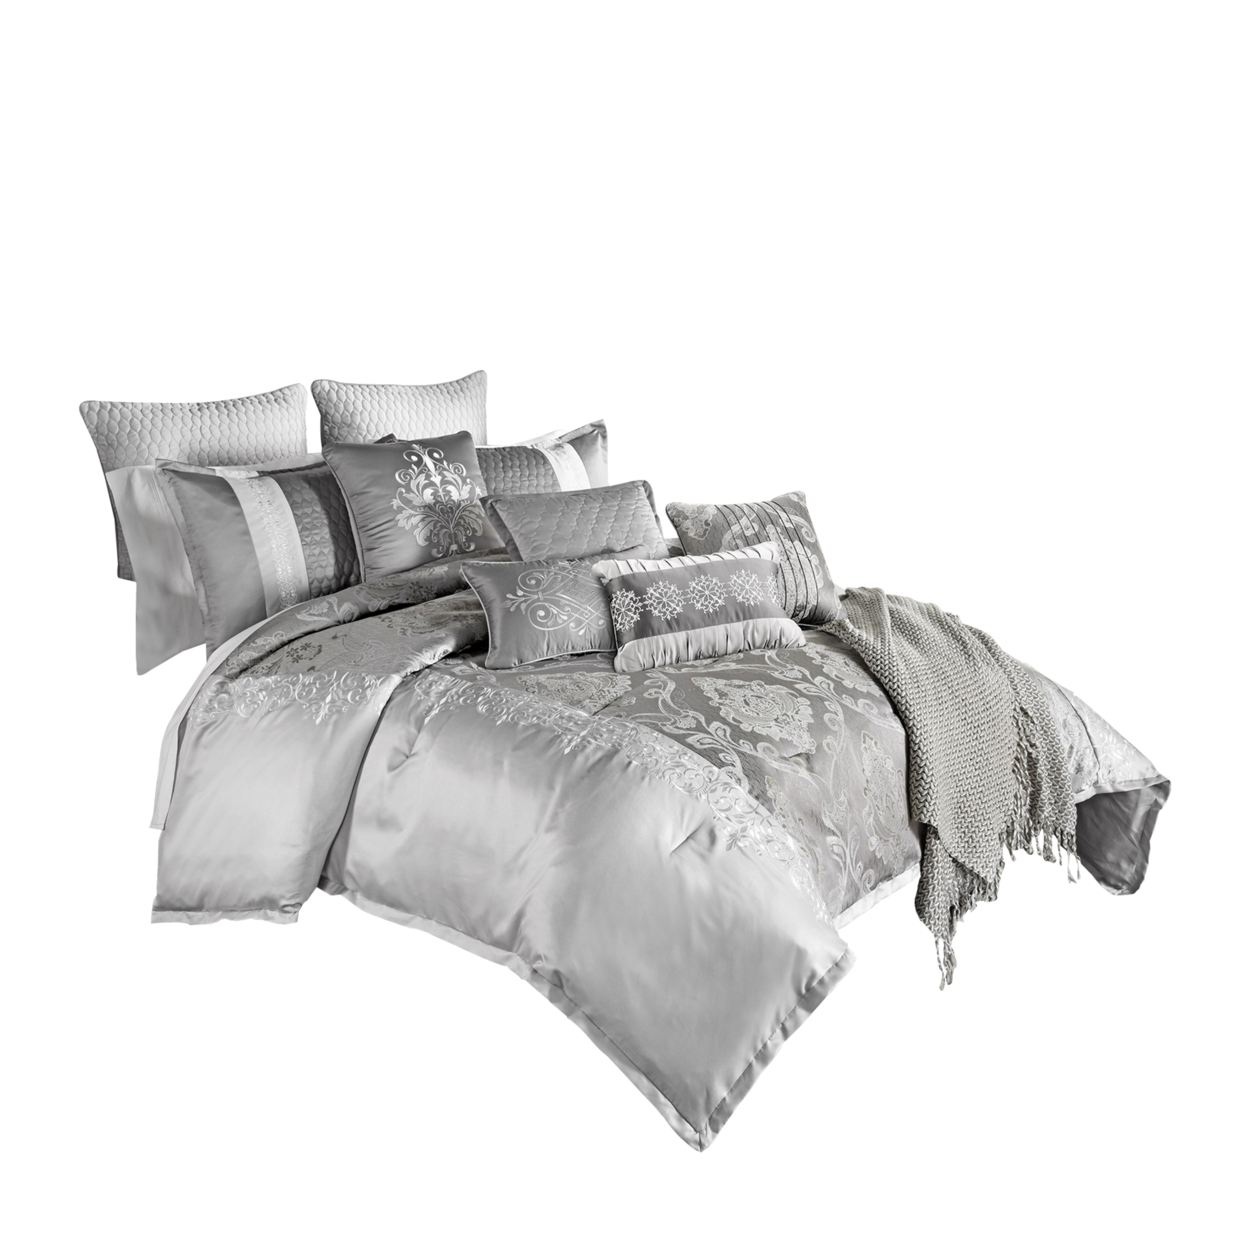 12 Piece King Polyester Comforter Set With Medallion Print, Platinum Gray- Saltoro Sherpi